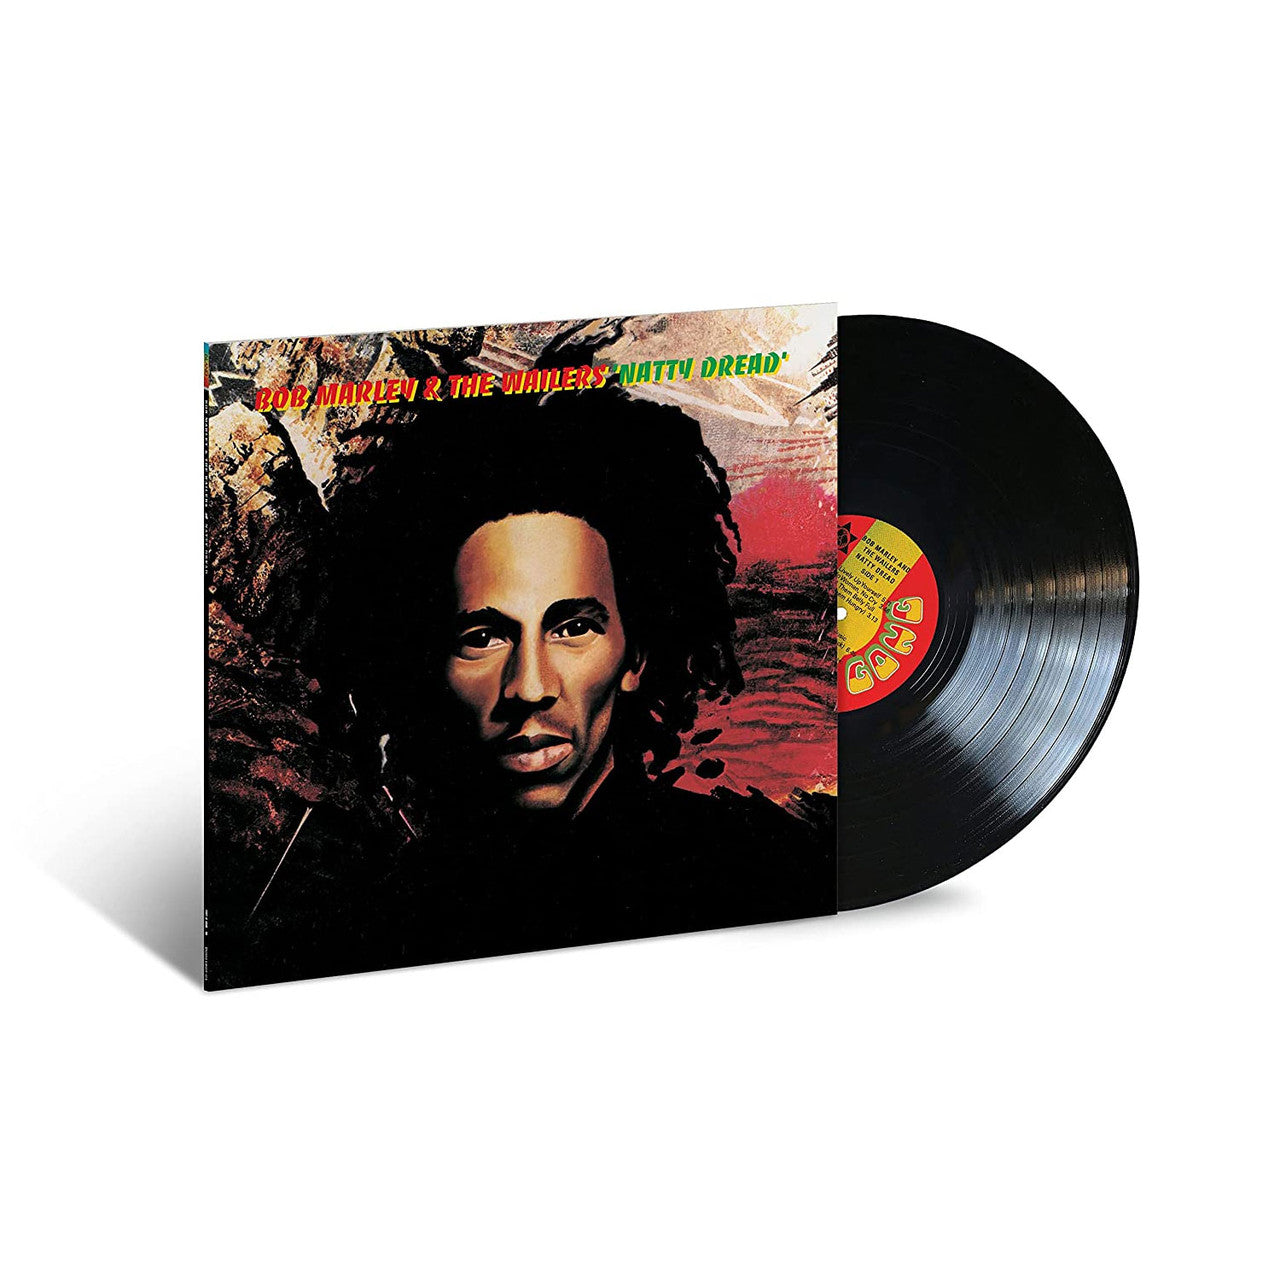 Bob Marley &amp; the Wailers - Natty Dread - Tuff Gong LP